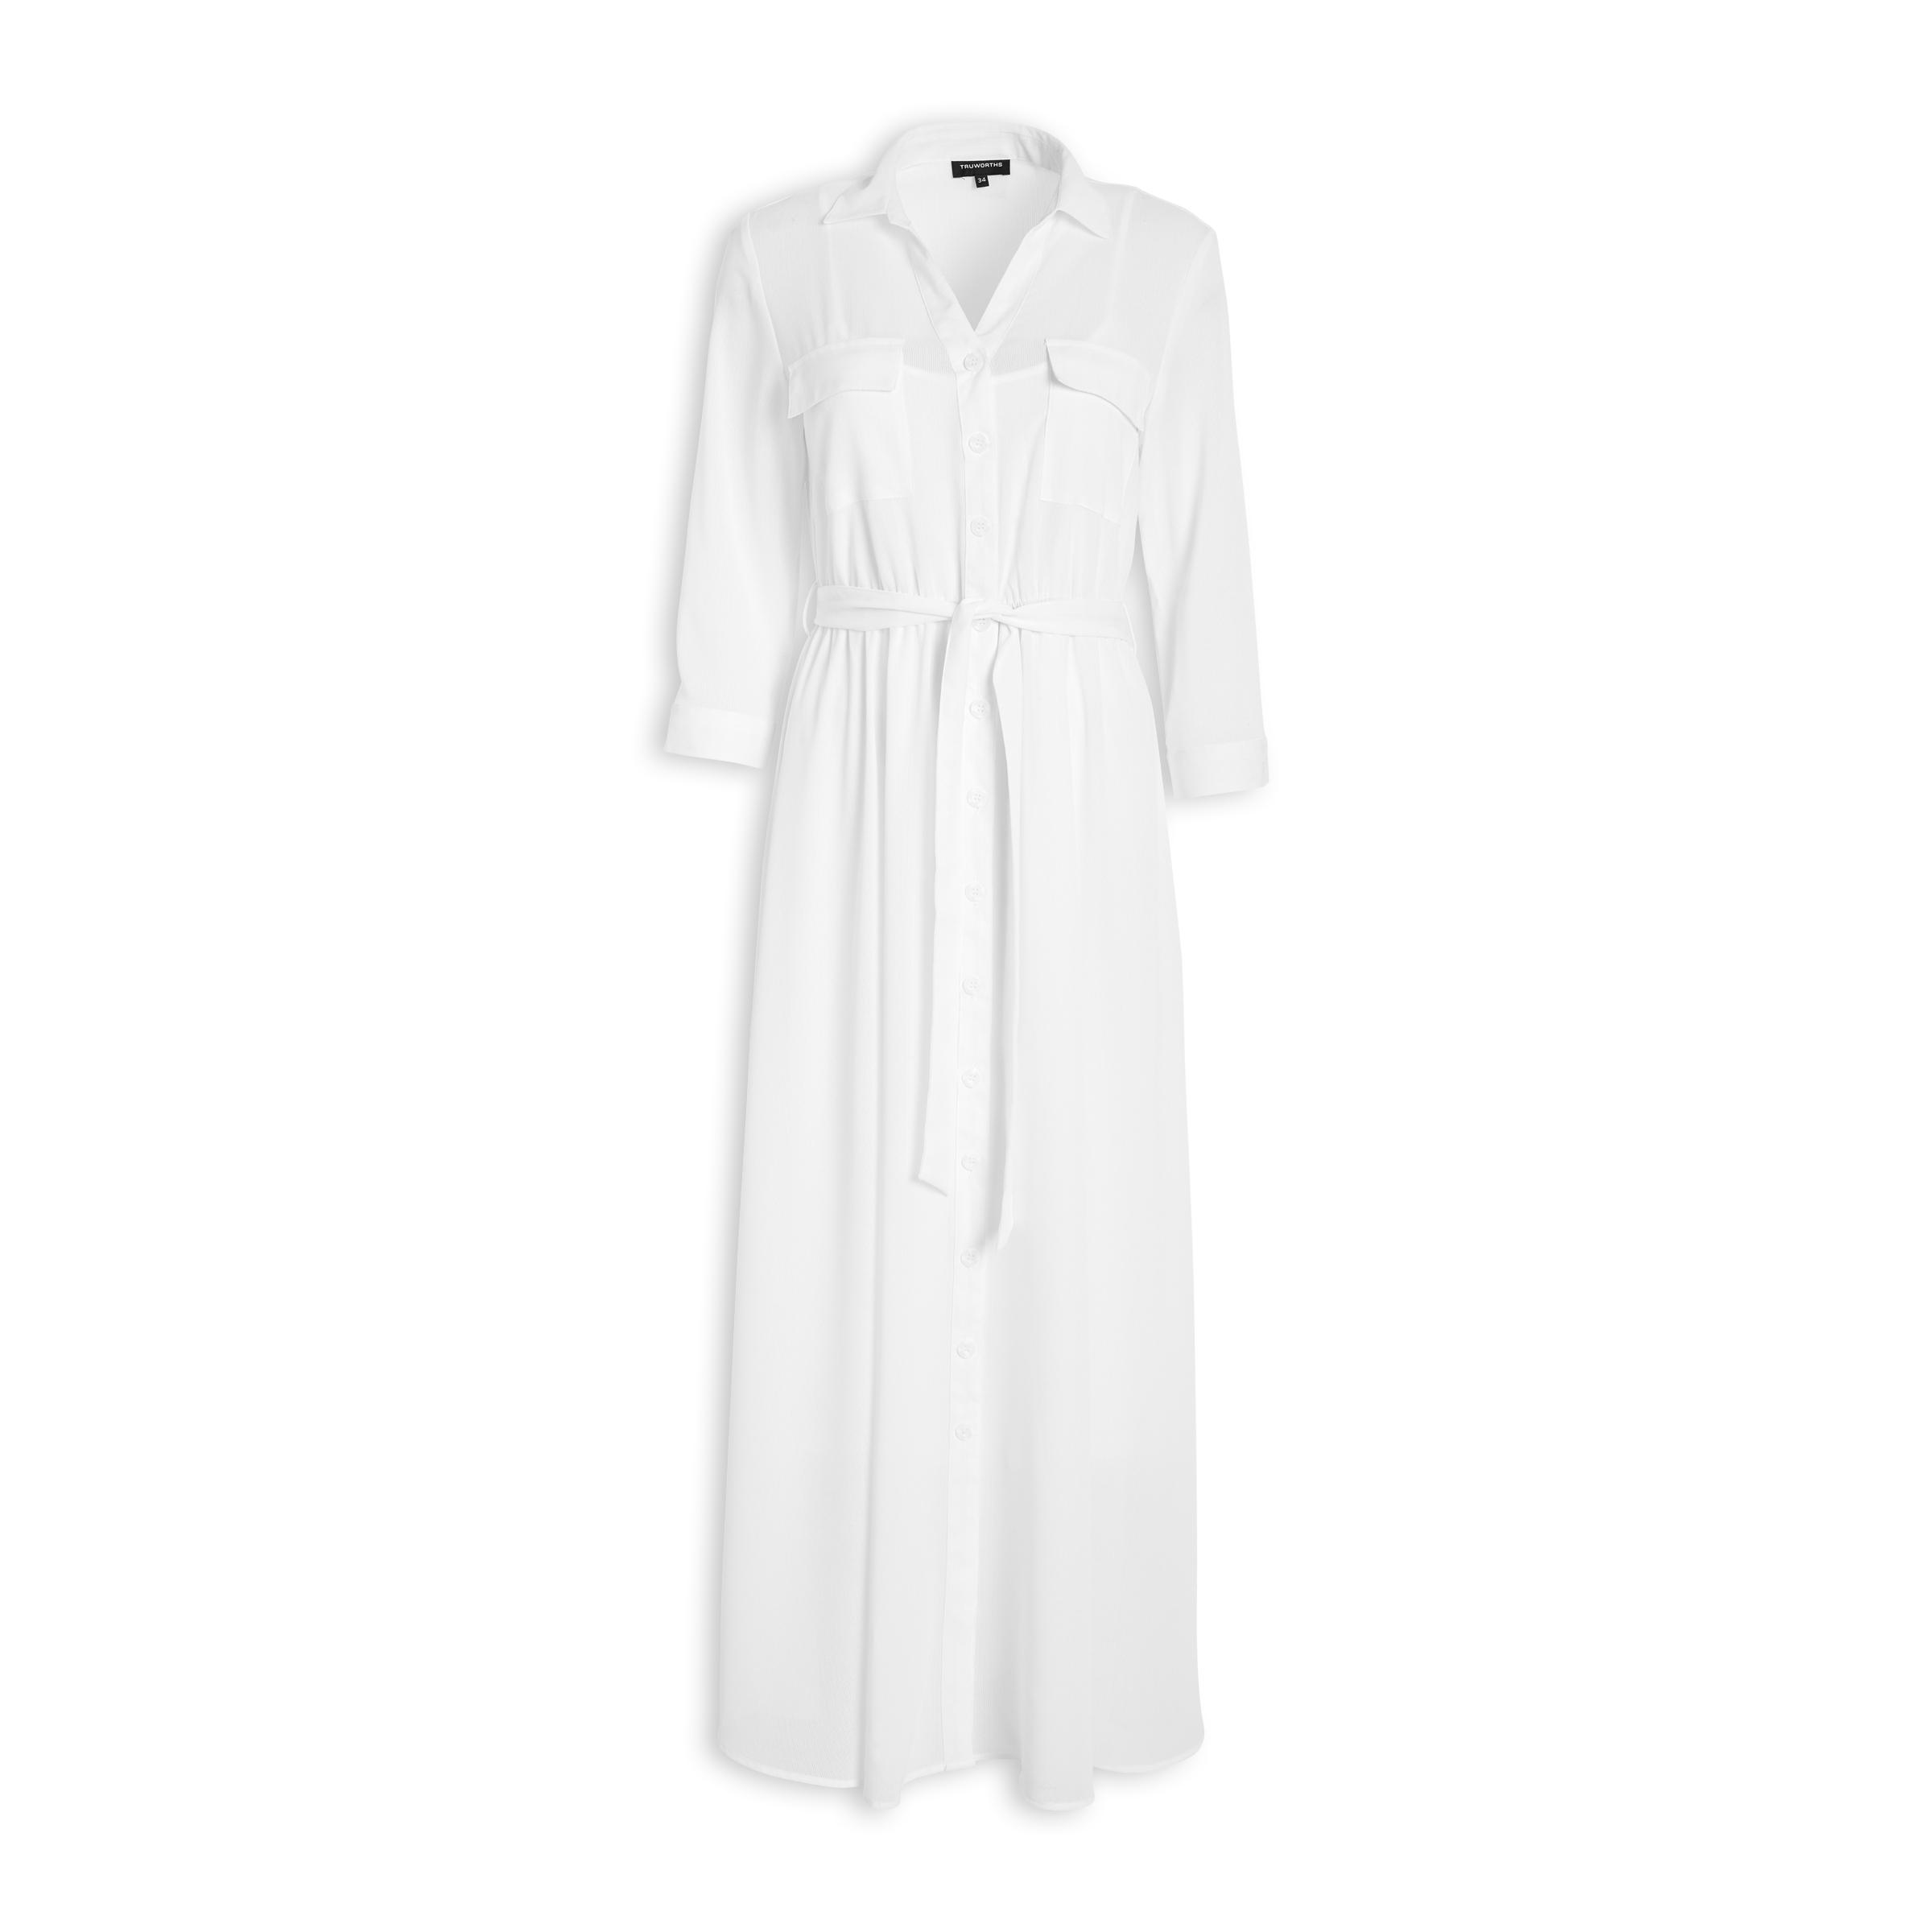 Buy Truworths White Shirtdress Online | Truworths